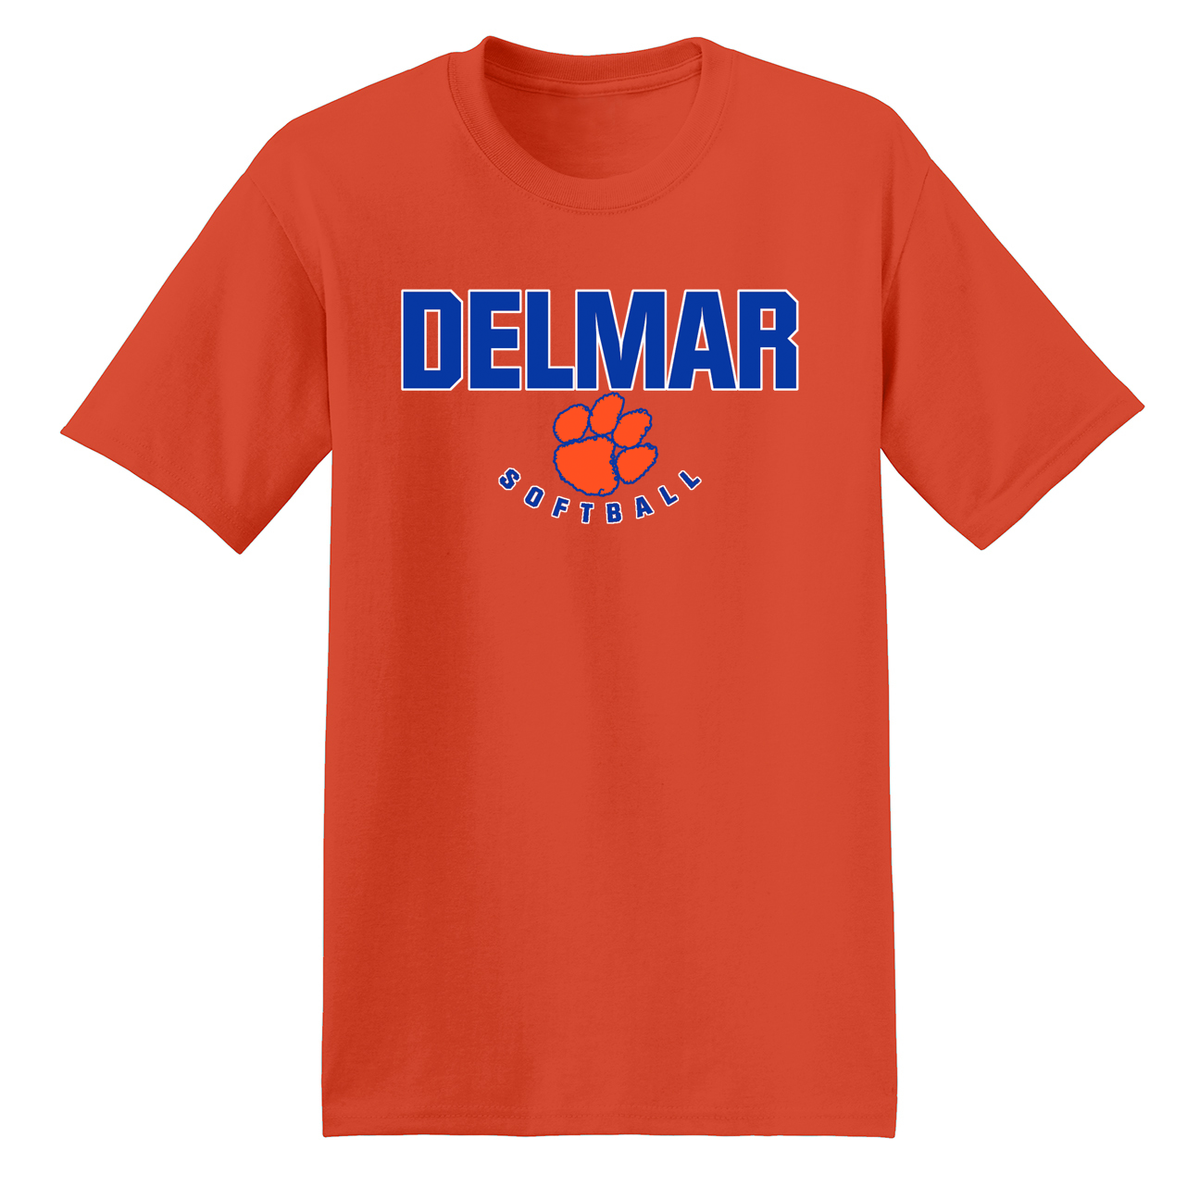 Delmar Softball T-Shirt